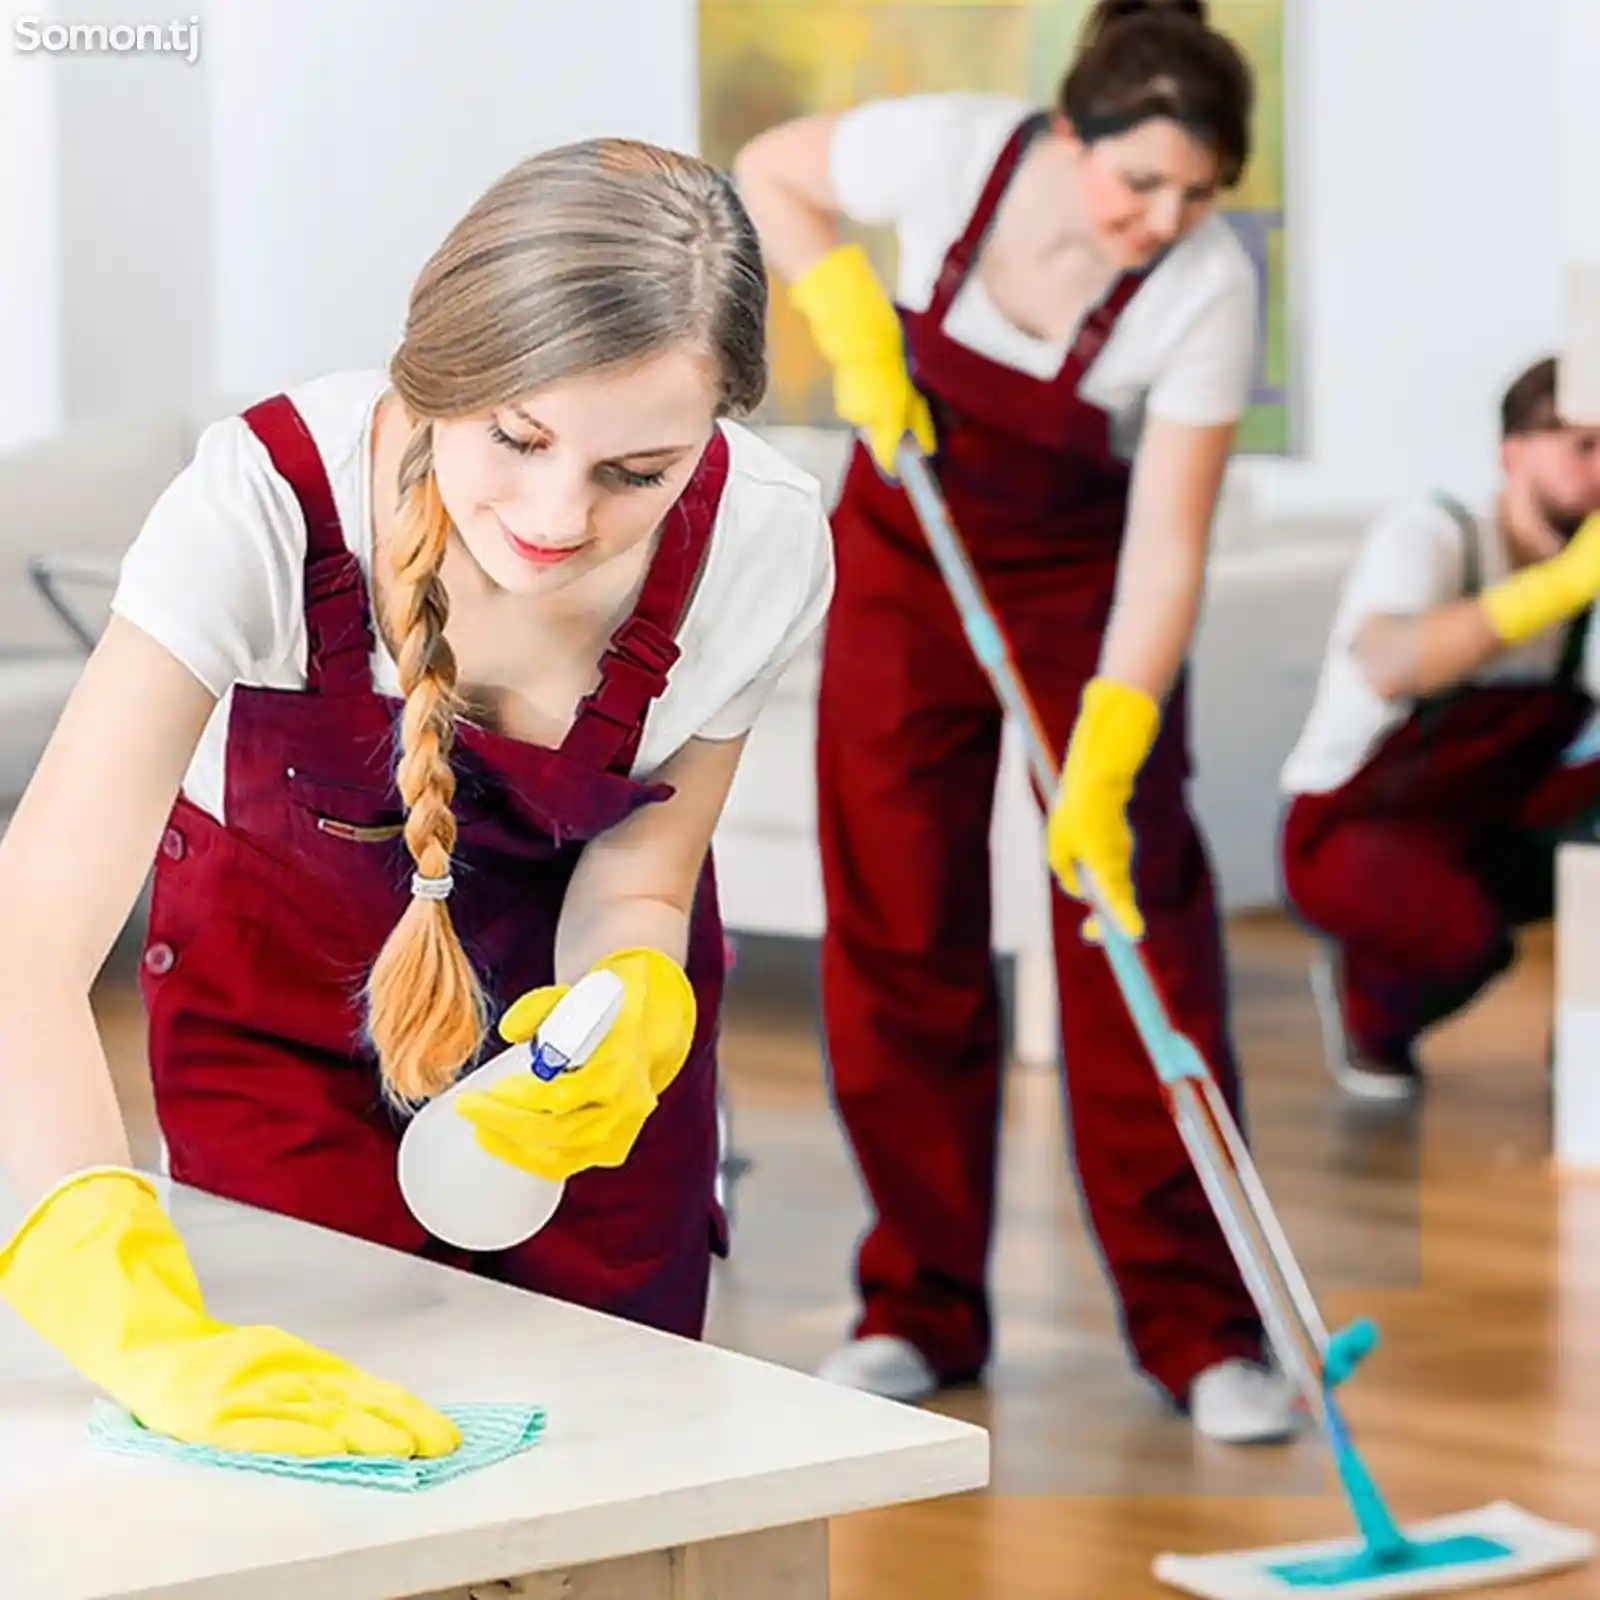 Услуги по чистке и уборке квартир и домов-1